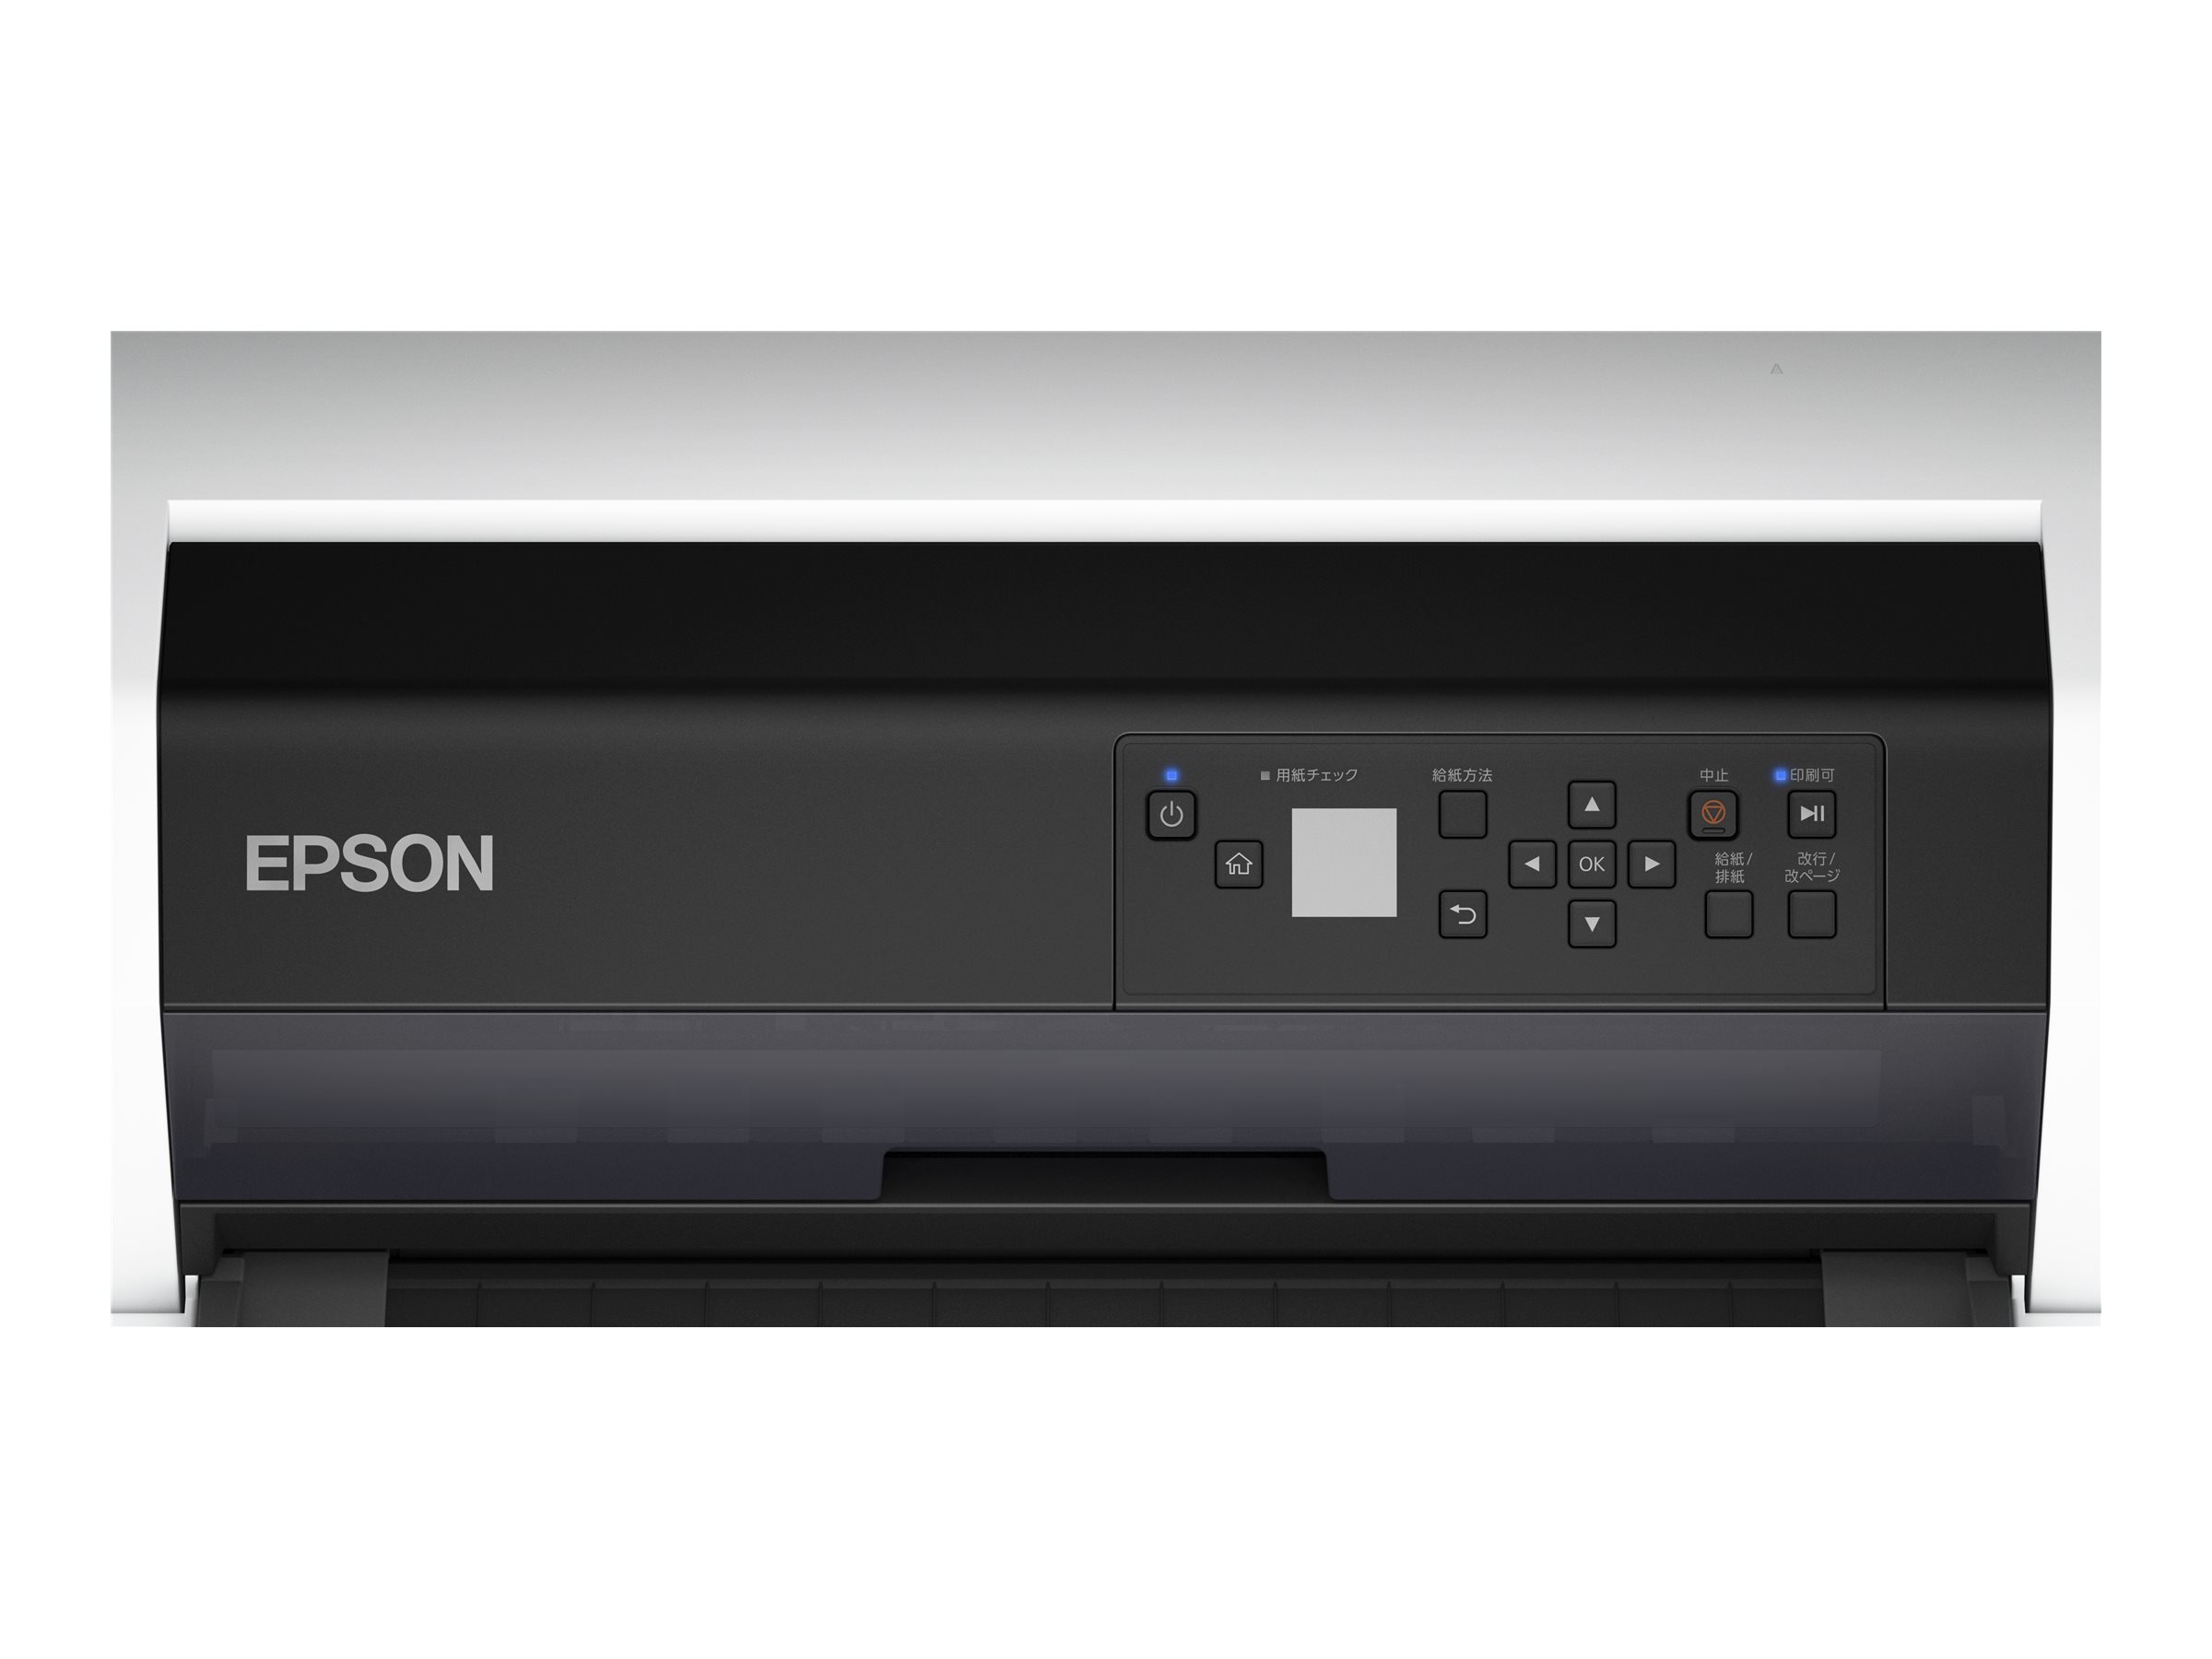 Epson DLQ 3500II - Imprimante - couleur - matricielle - 10 cpi - 24 pin - jusqu'à 550 car/sec (mono) / jusqu'à 550 car/sec (couleur) - parallèle, USB - C11CH59401 - Imprimantes matricielles